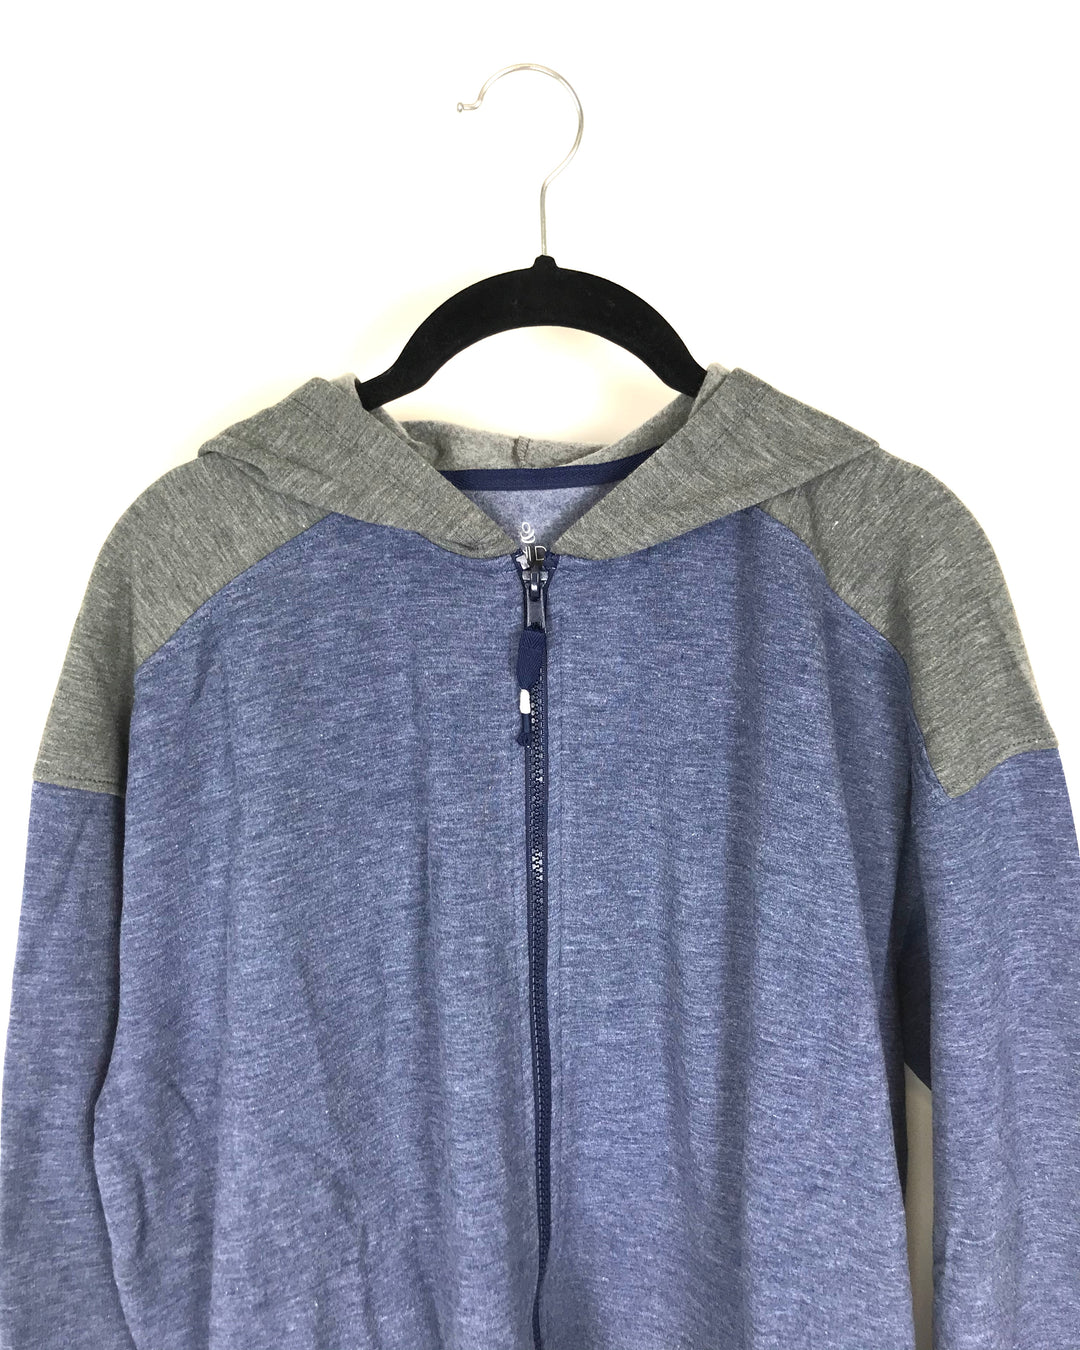 Blue/Grey Zip Up Sweater -  Small and Medium